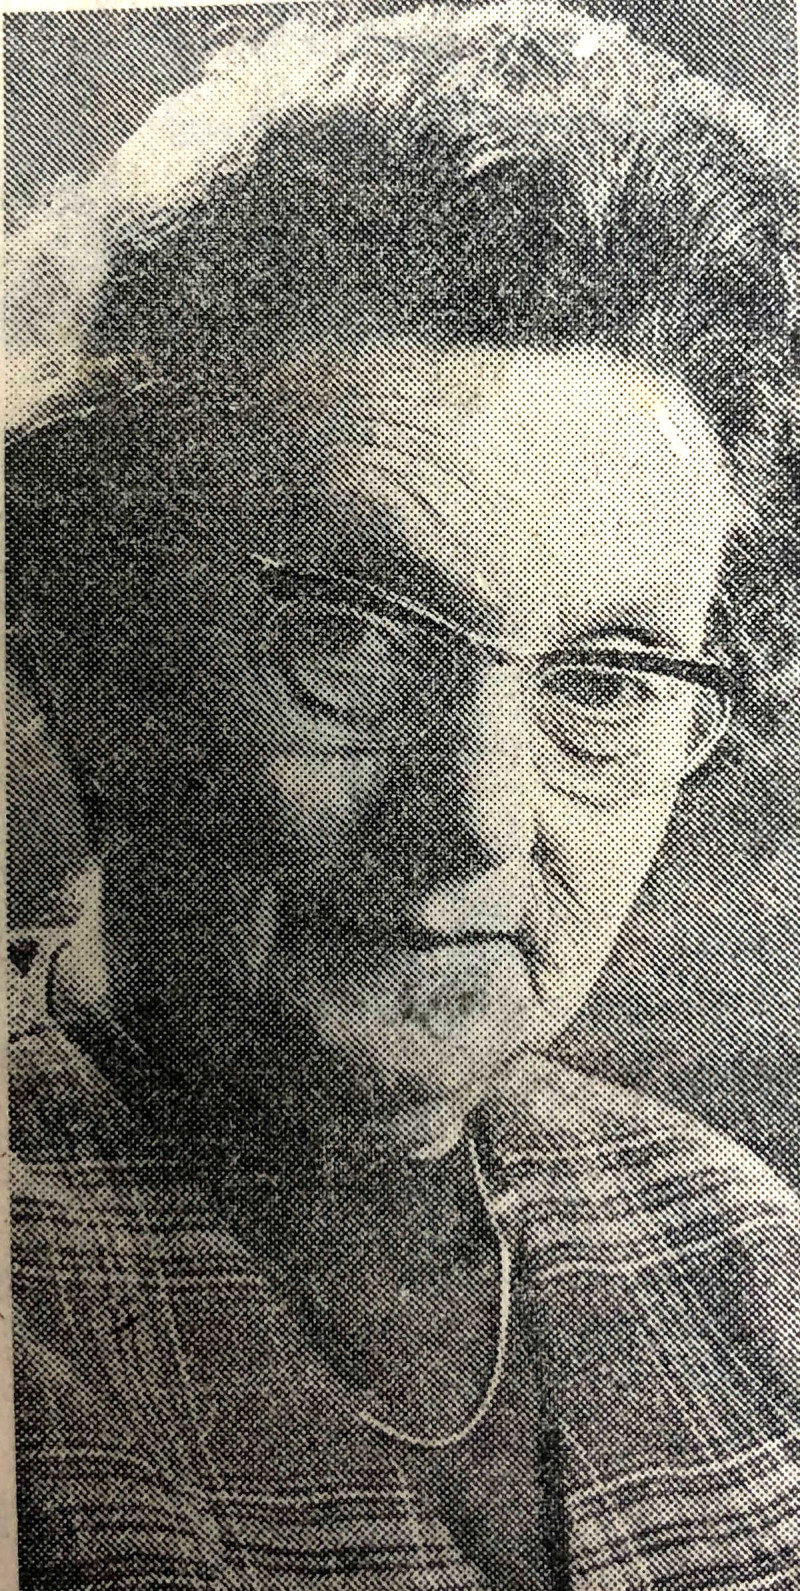 Phyllis Cockburn upon her retirement from the Bracknell Development Corporation. Bracknell News, 30th January 1975 ref. NTB/G26/1/21.